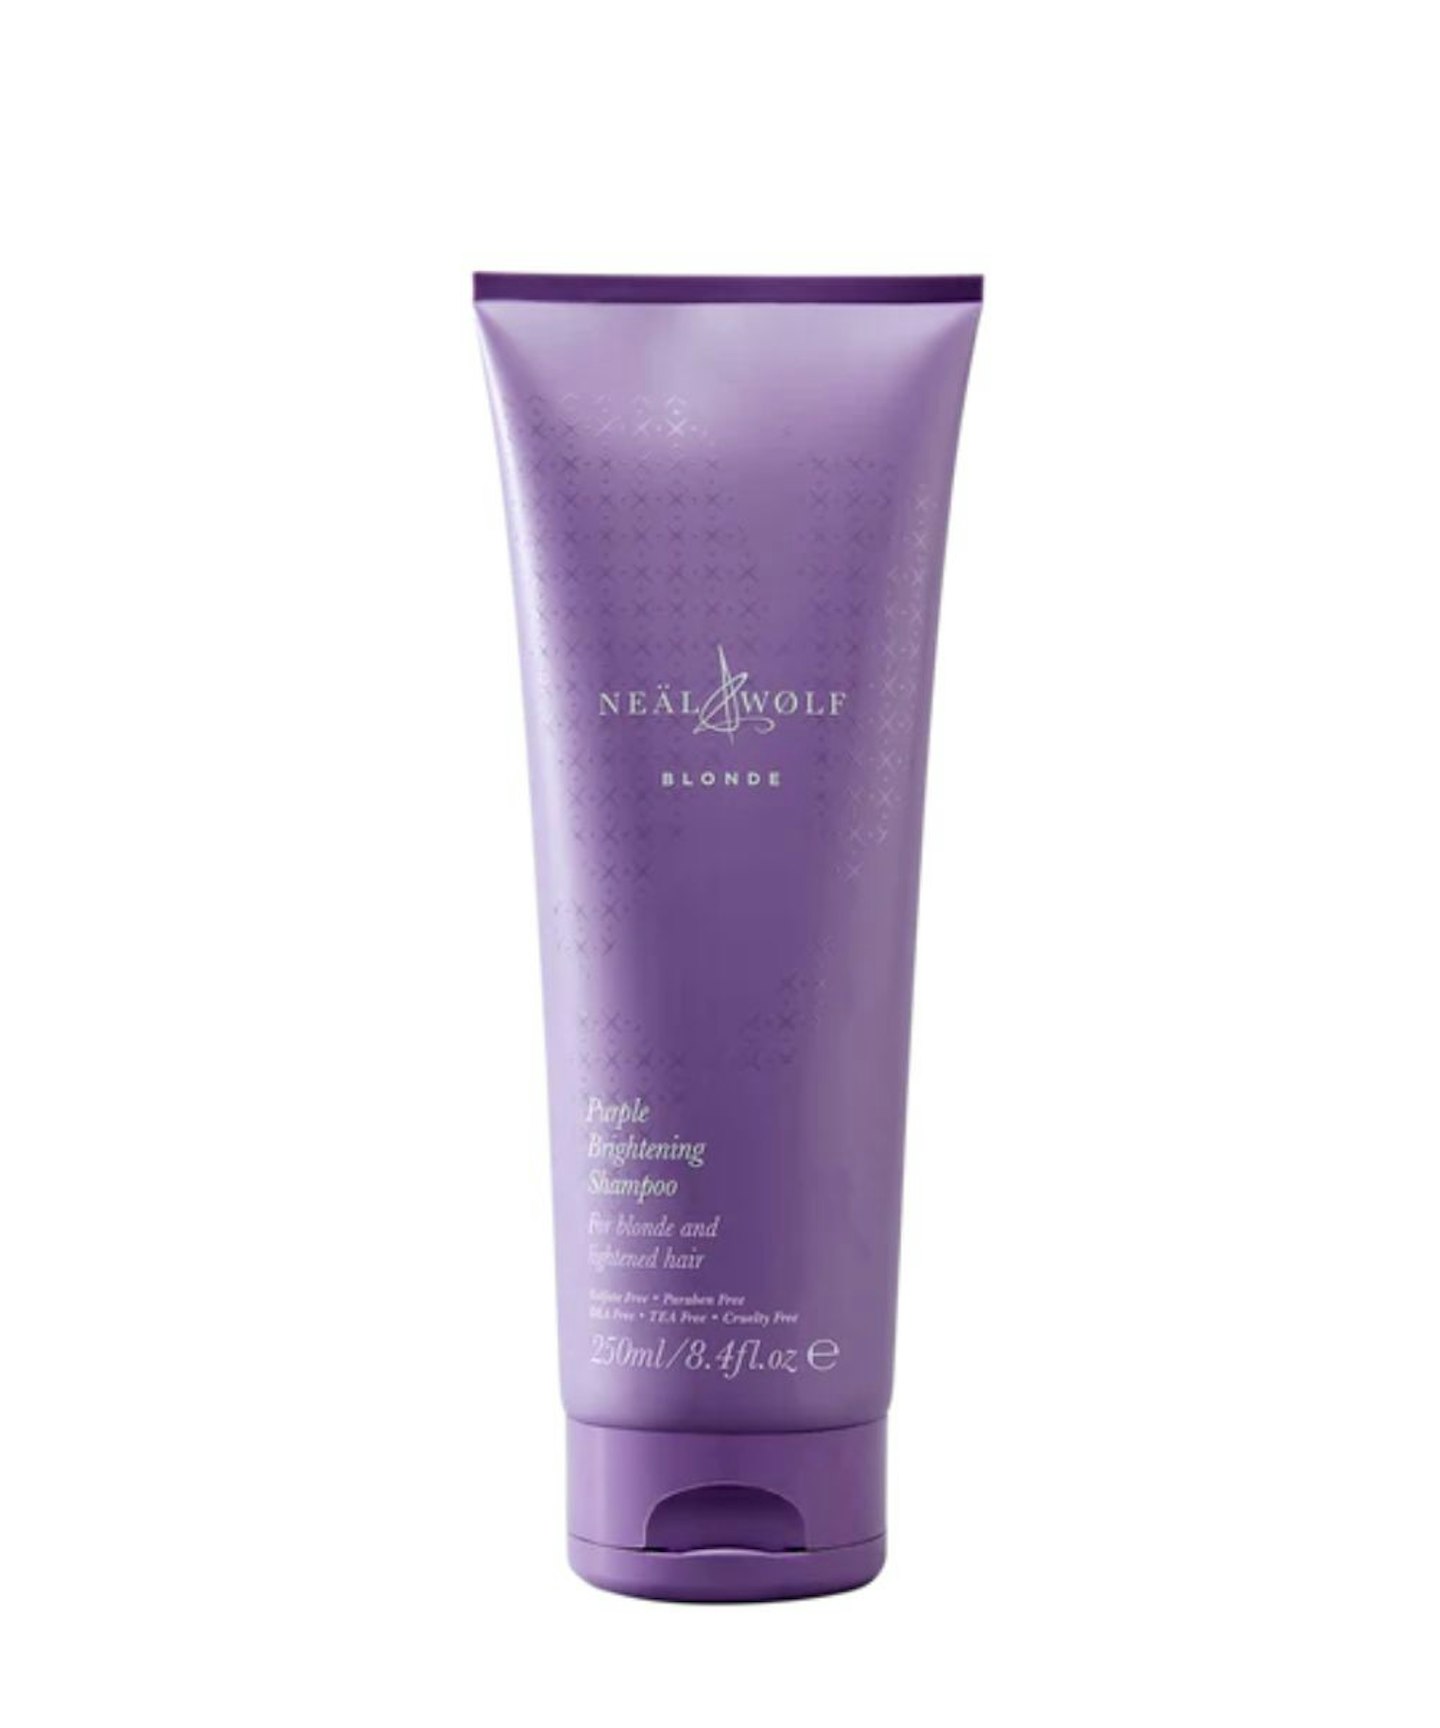 Blonde Purple Brightening Shampoo, 250ml